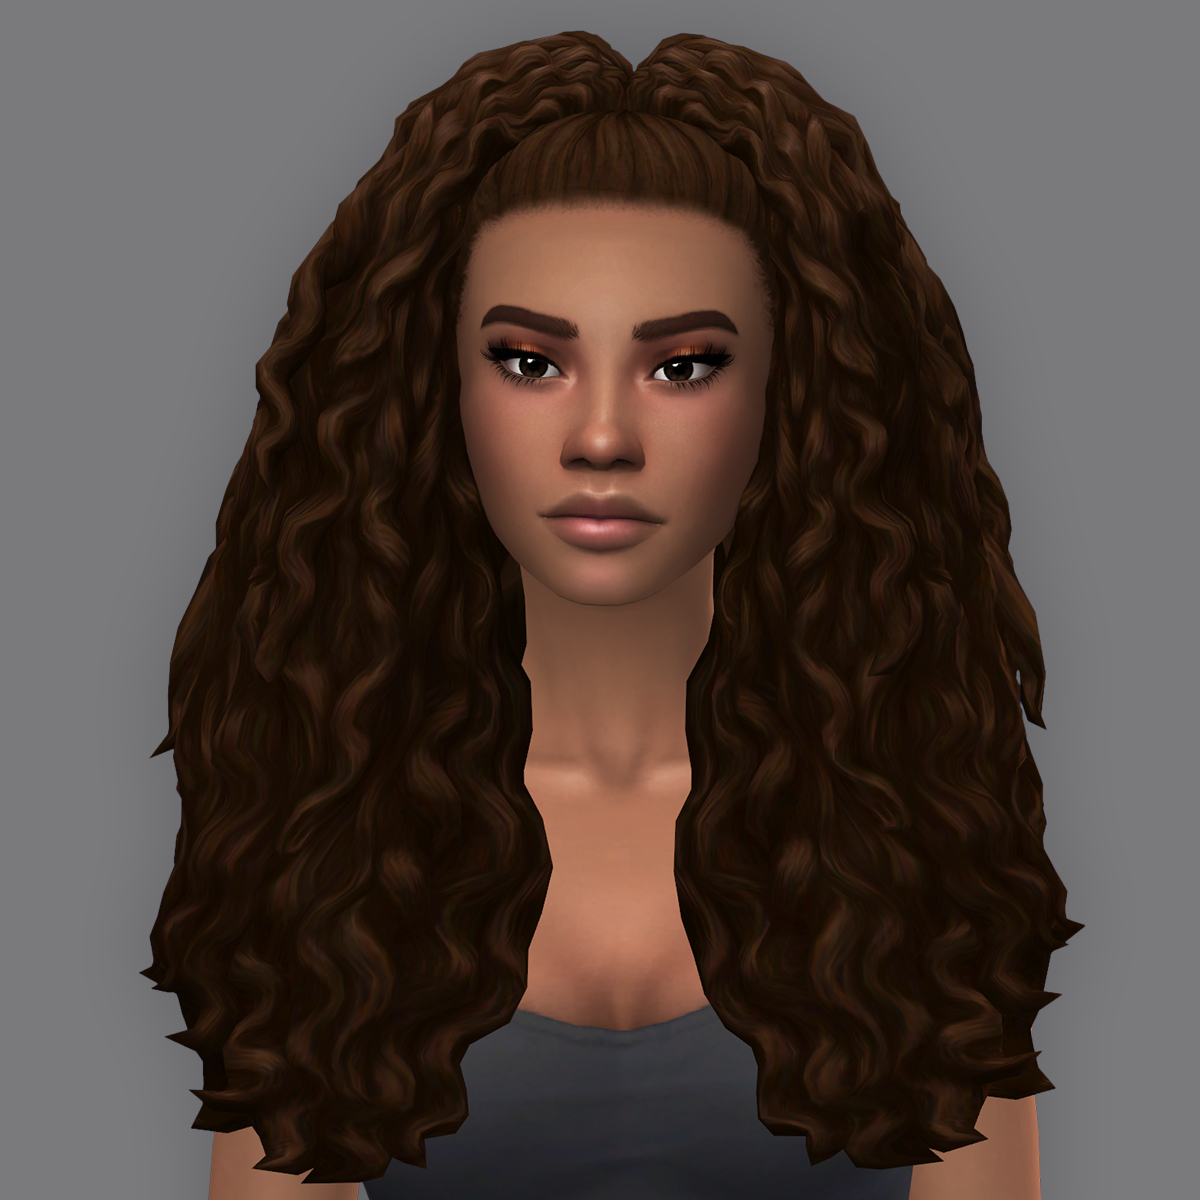 Naturally Mine - Adult Hair - The Sims 4 Create a Sim - CurseForge